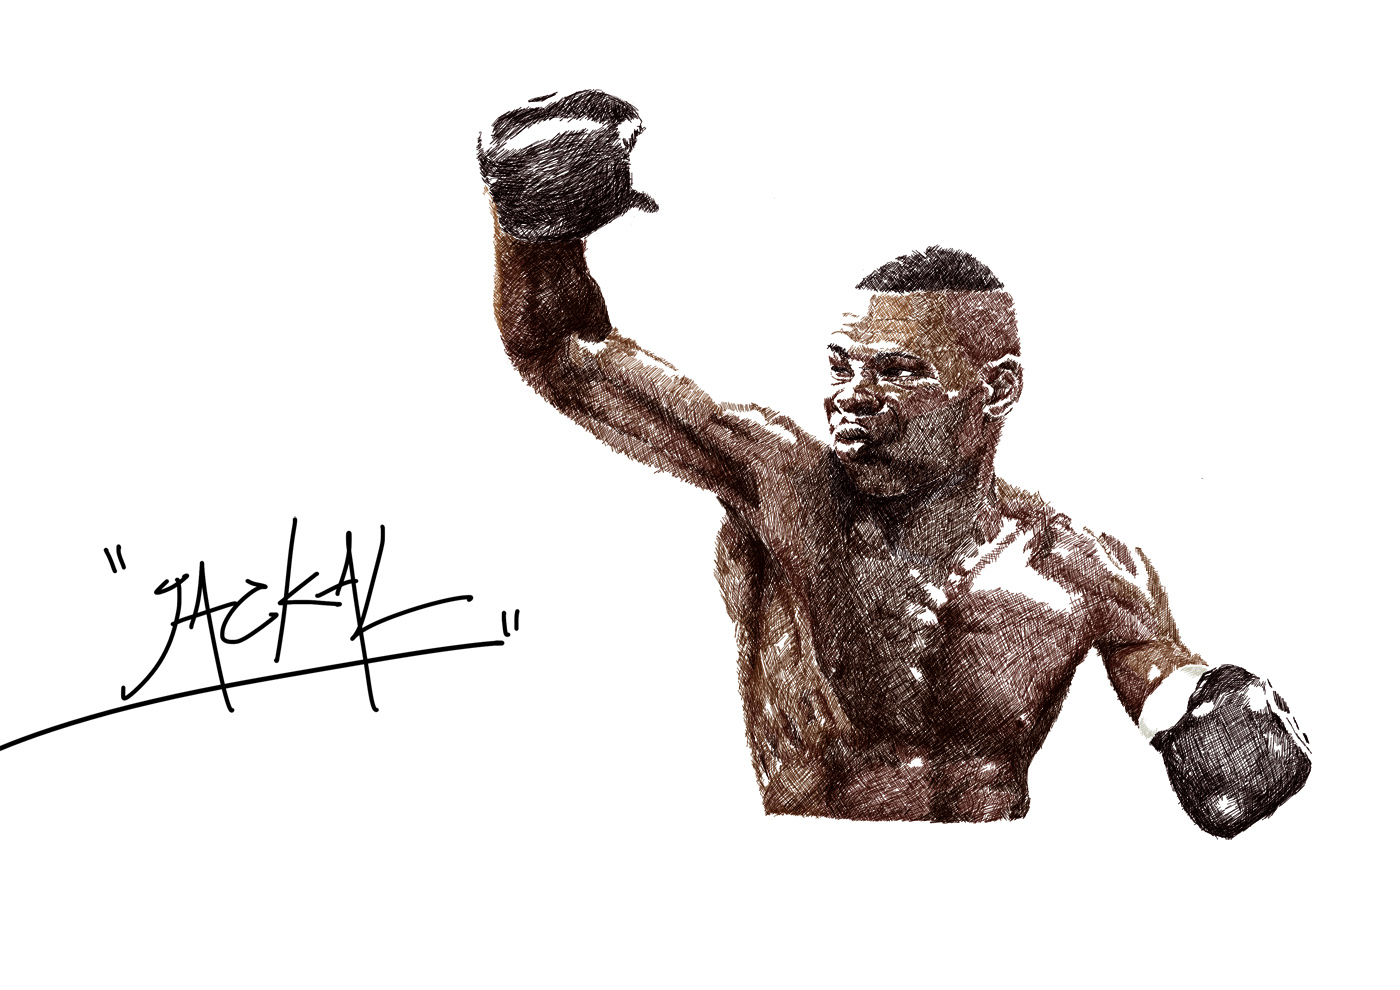 Boxing Floyd Mayweather Gennady Golovkin guillermo rigondeaux Naoya Inoue sports vasyl lomachenko Digital Art  portrait sketch